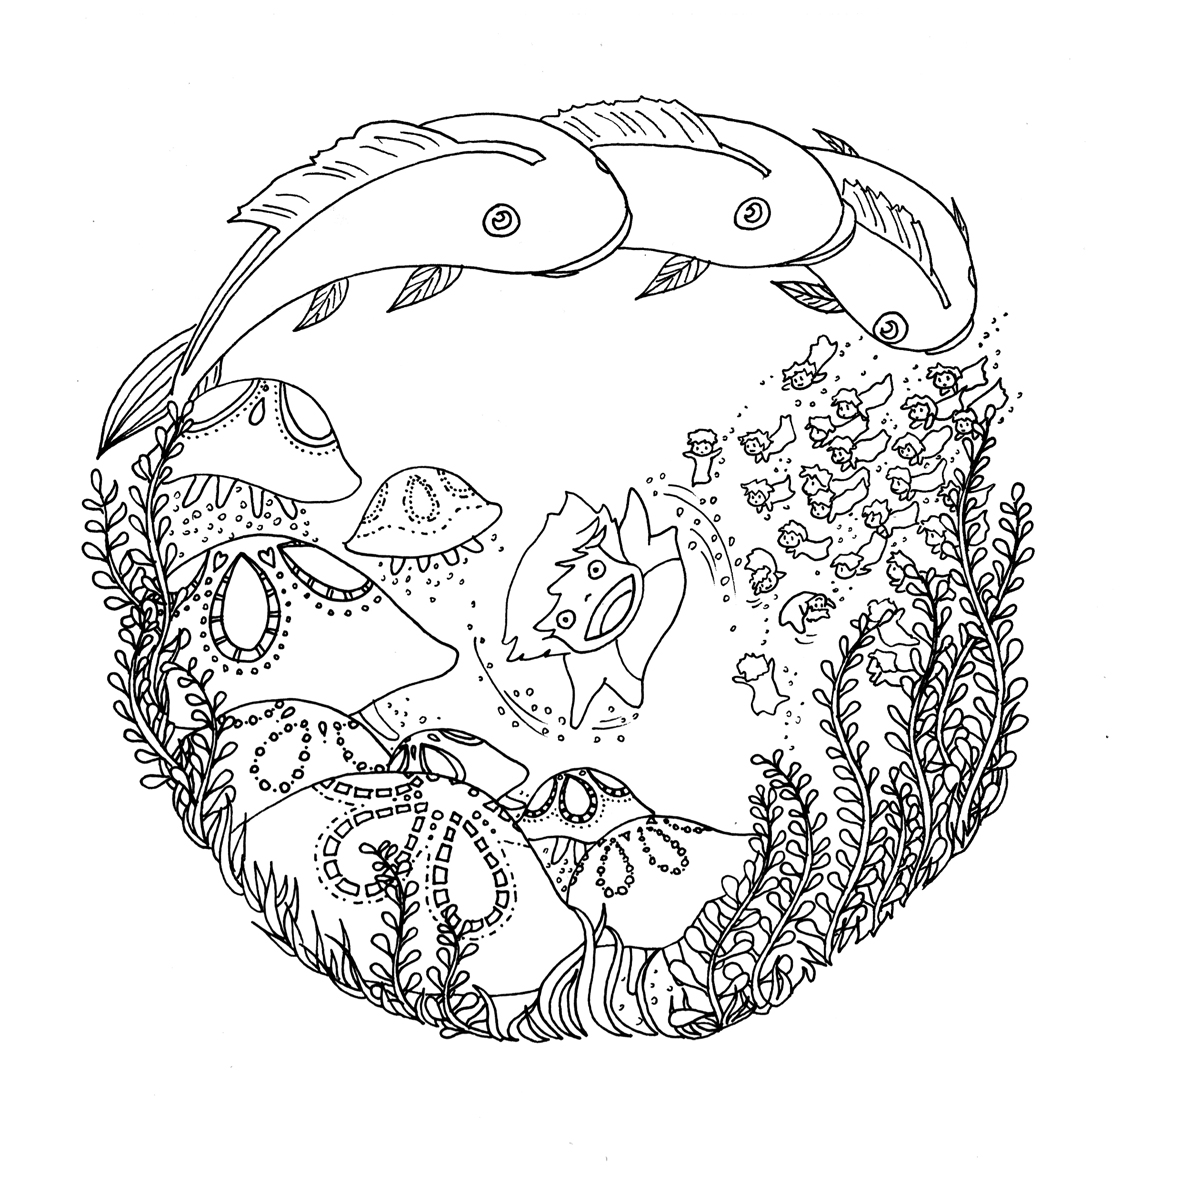 Impression dessin Totoro à imprimer par Chocobo - Artherapie.ca